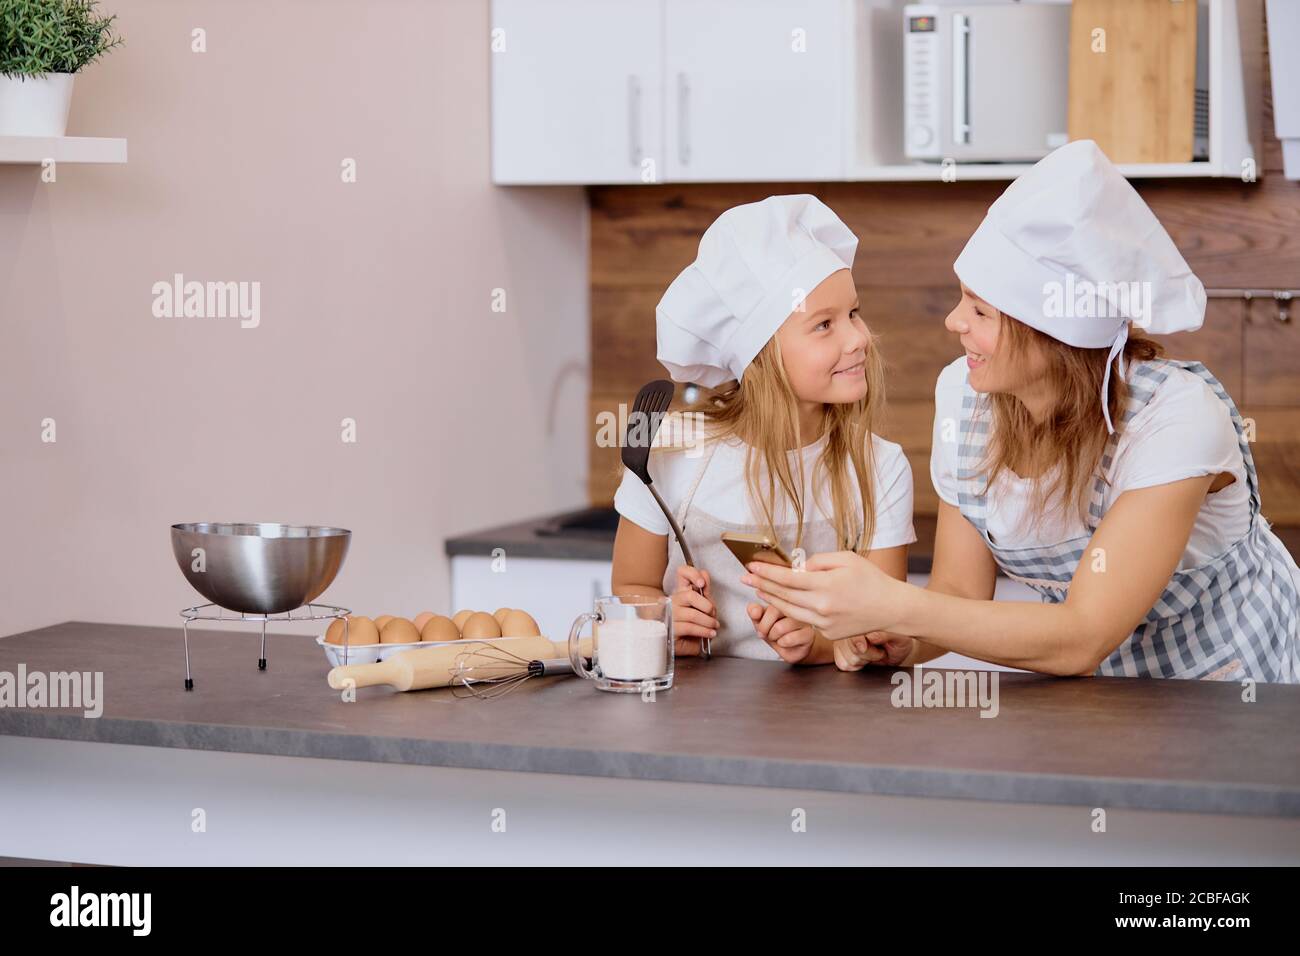 concepto de horneado, cocina. hermosa madre e hija se miran unos a otros con amor, yendo a hornear en la cocina Foto de stock